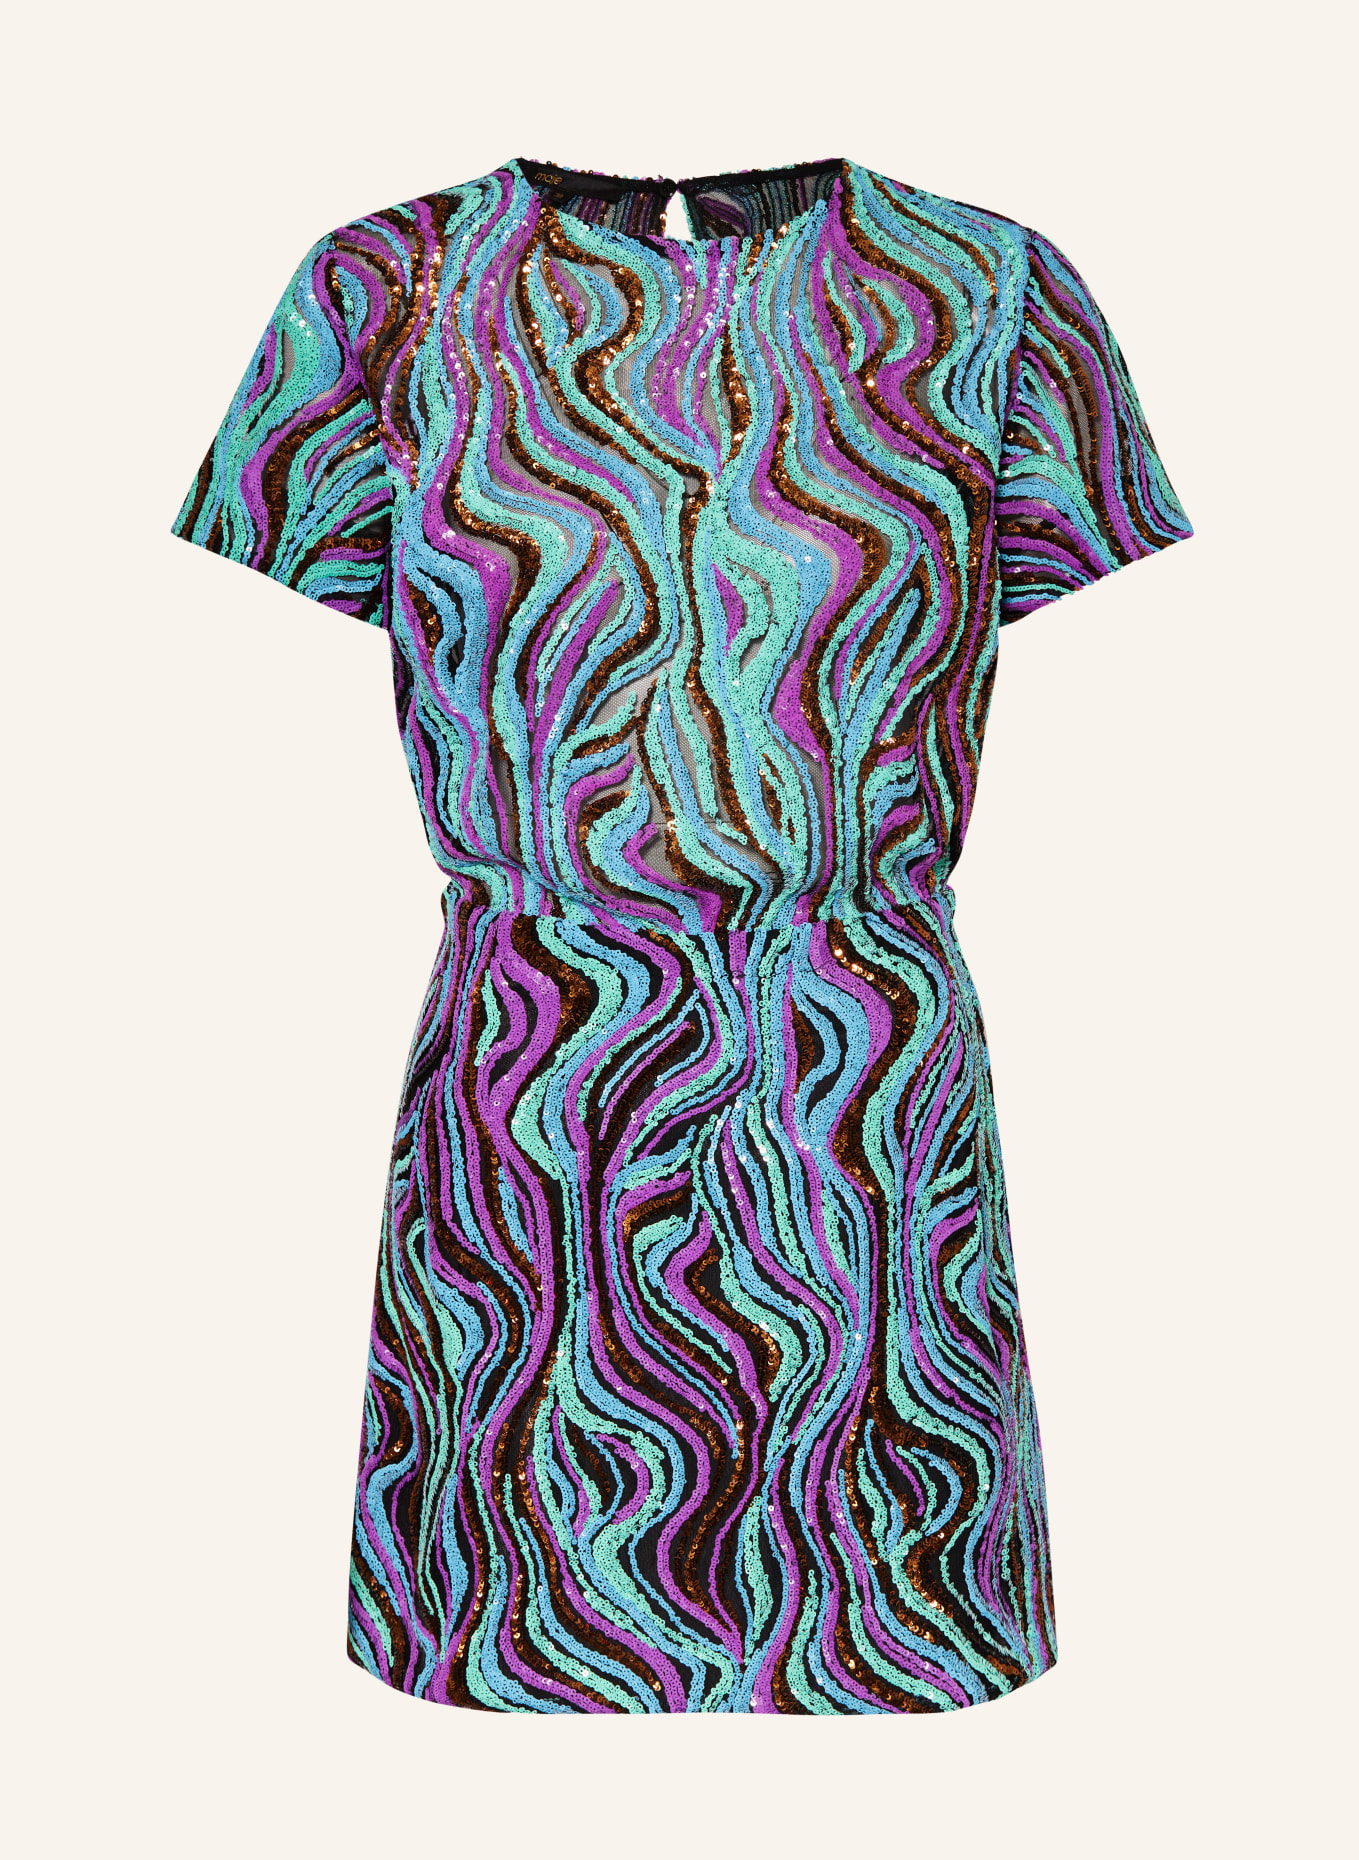 maje Kleid mit Pailletten, Farbe: DUNKELBLAU/ TÜRKIS/ LILA (Bild 1)